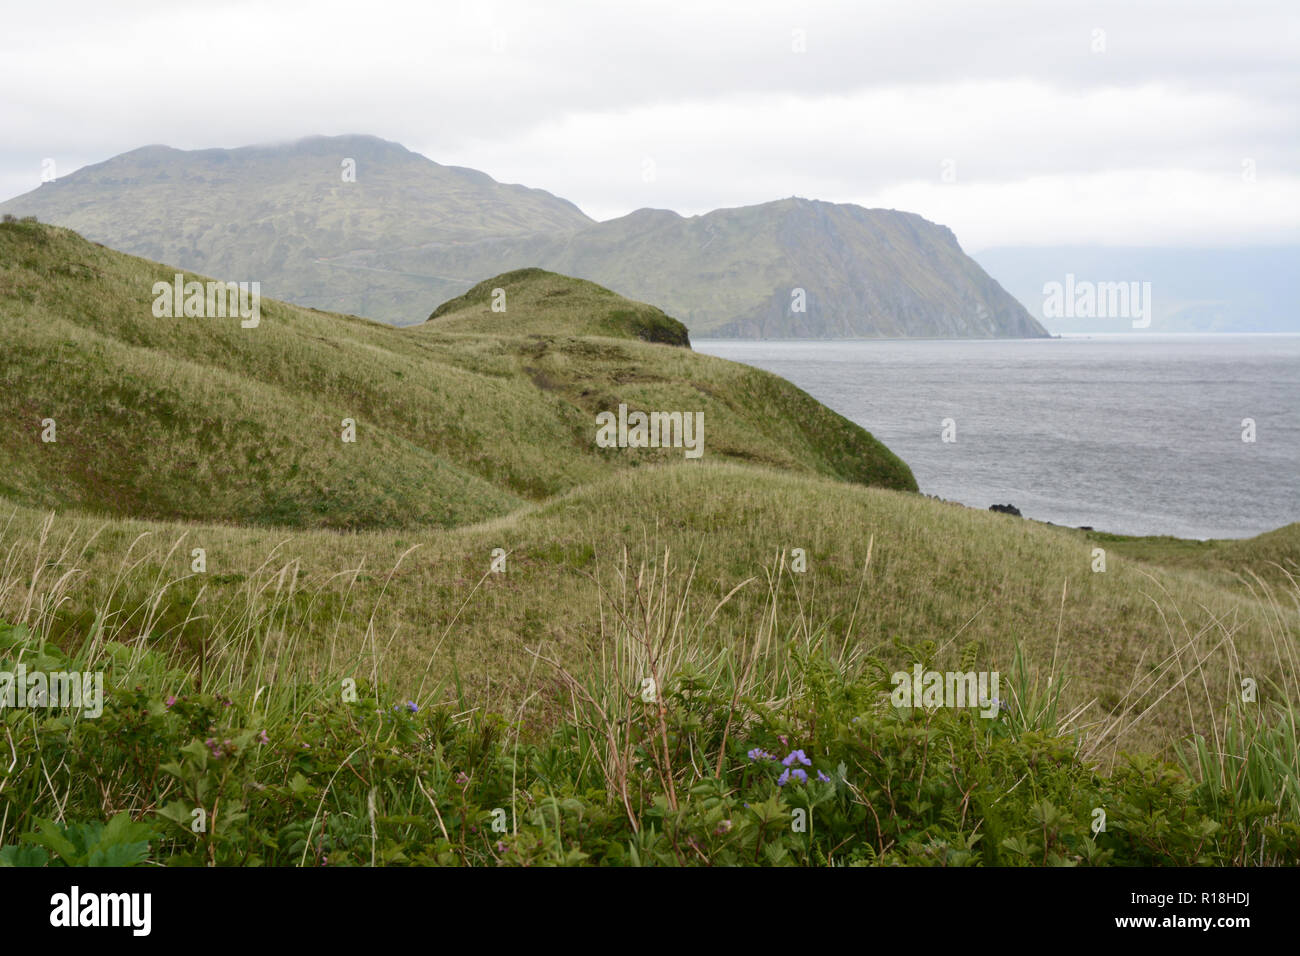 The rugged and mountainous coastline of Unalaska Island and the Bering Sea, in the Aleutian Islands chain, Alaska, United States Stock Photo